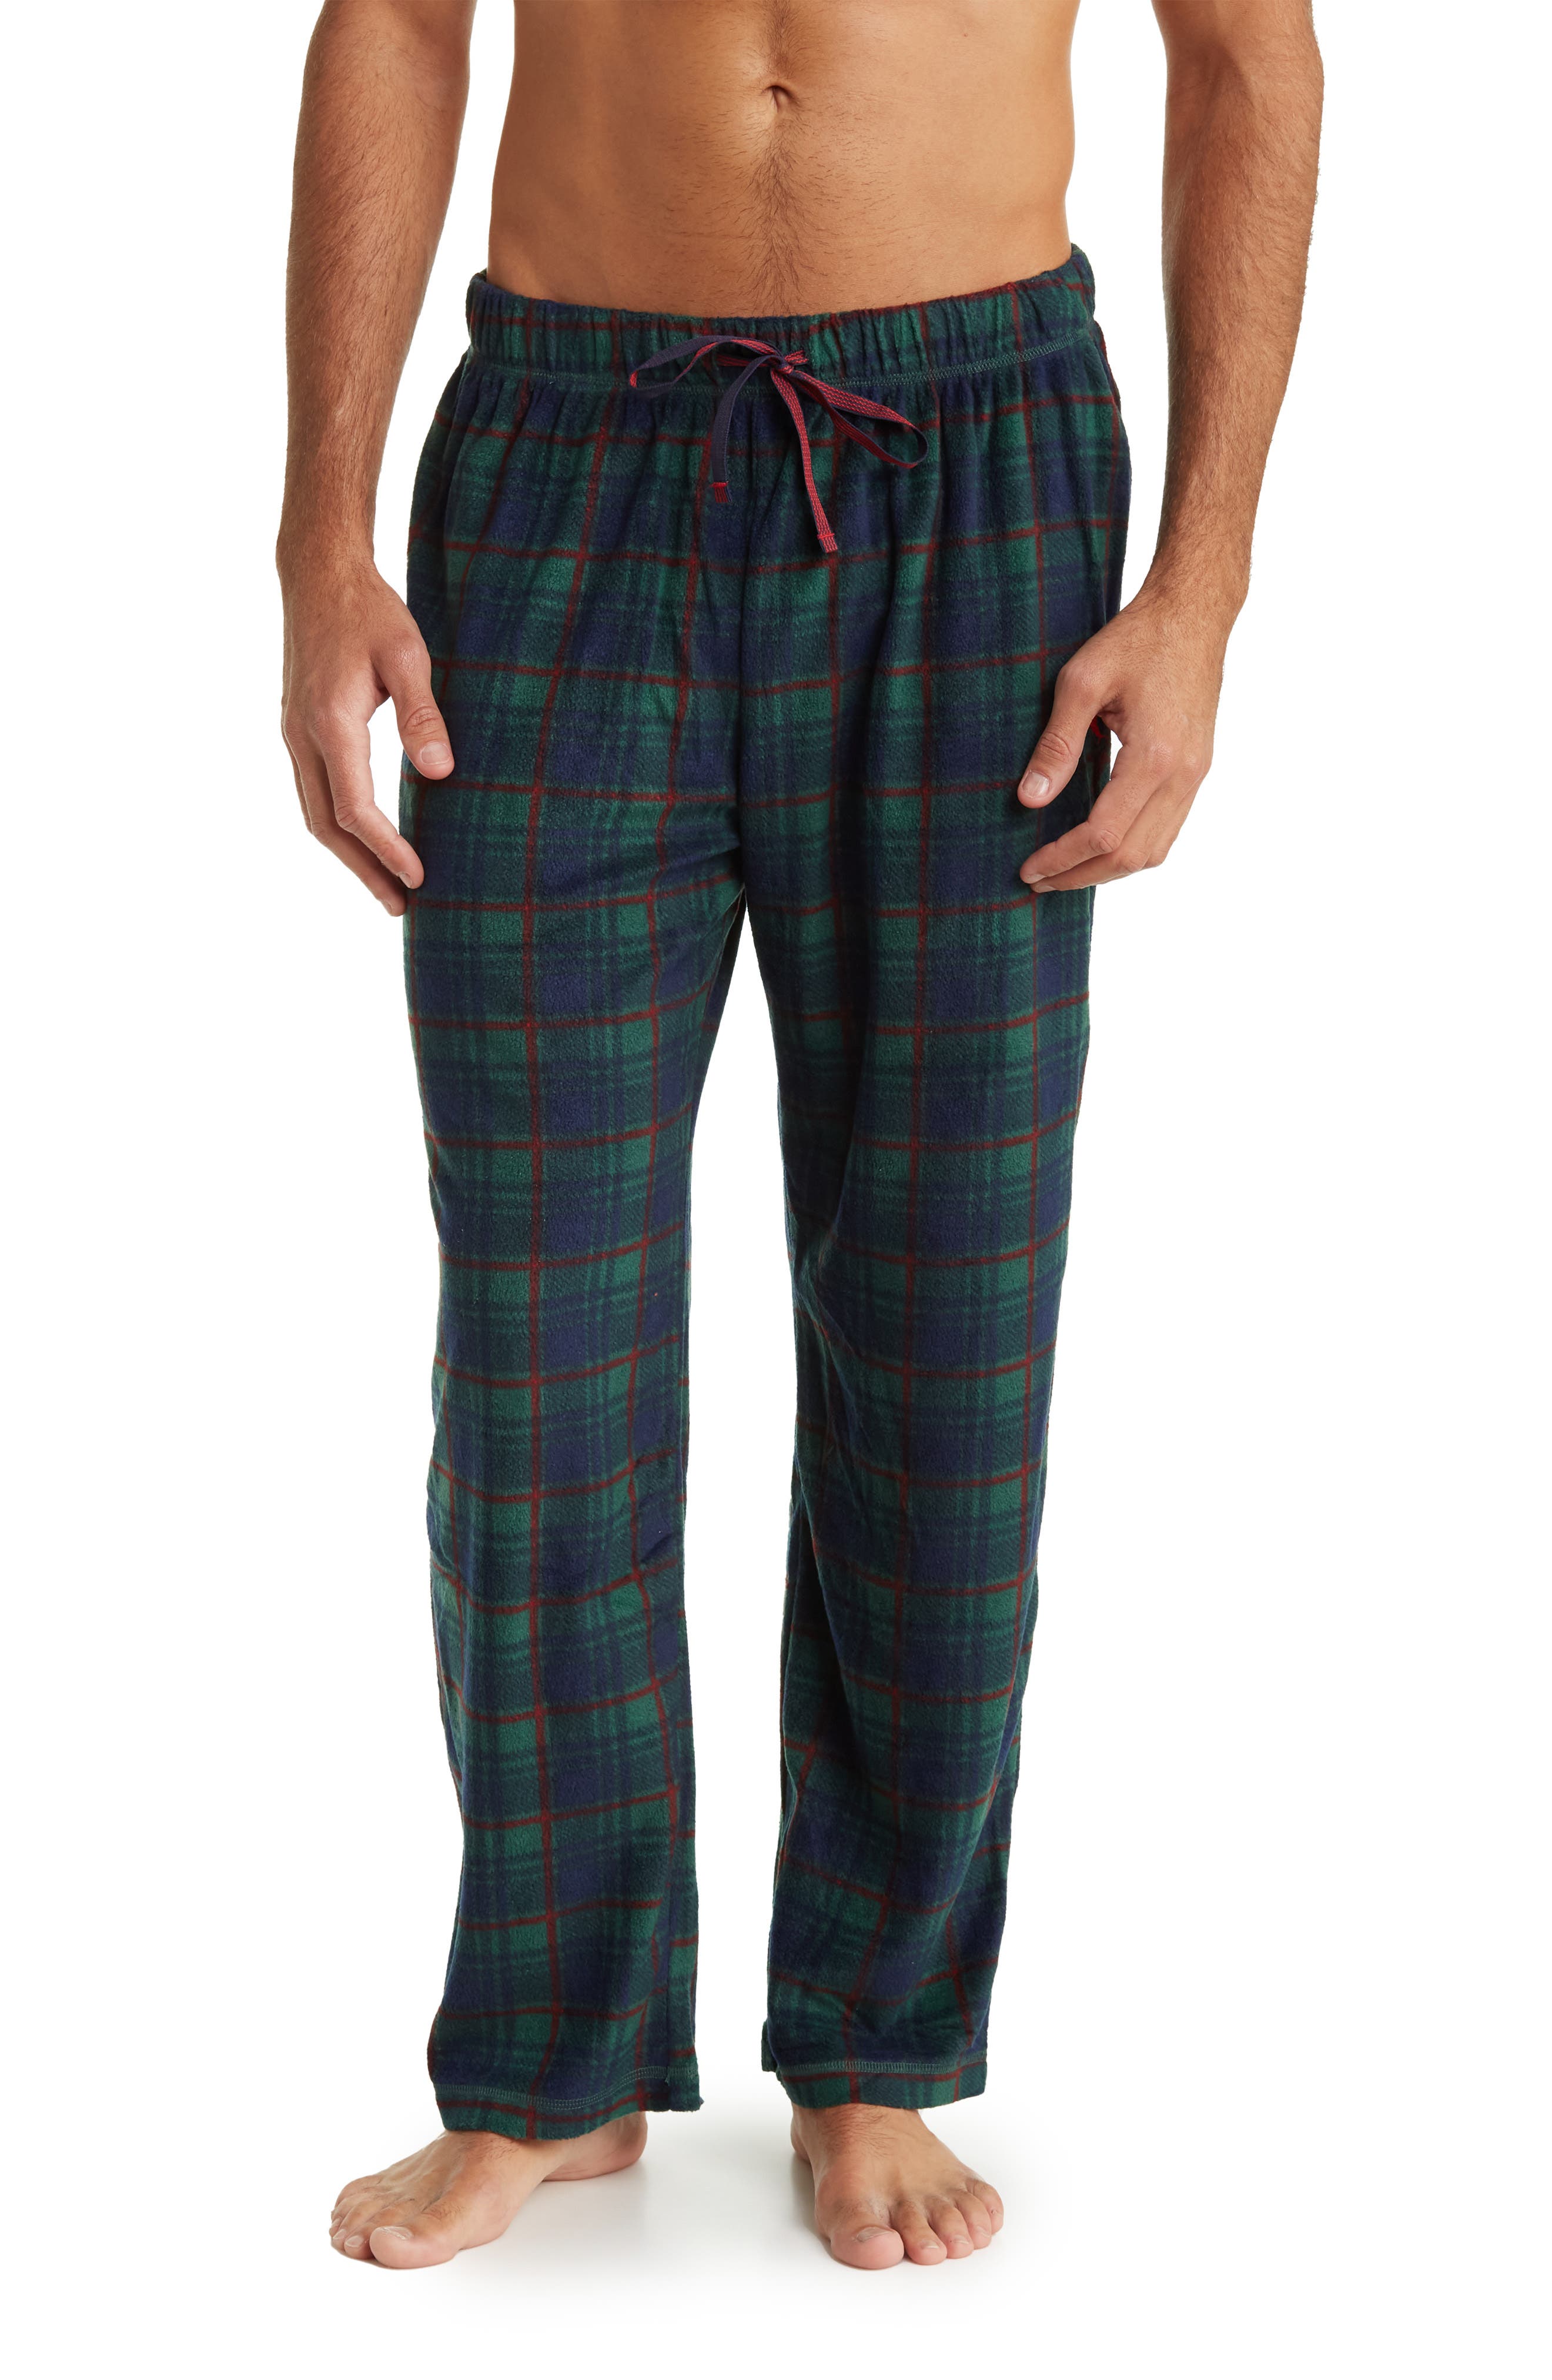 TEERFU Mens Twin Pack Lounge Shorts Stretch Jersey Sleep Night Wear Model Pyjamas Bottoms 